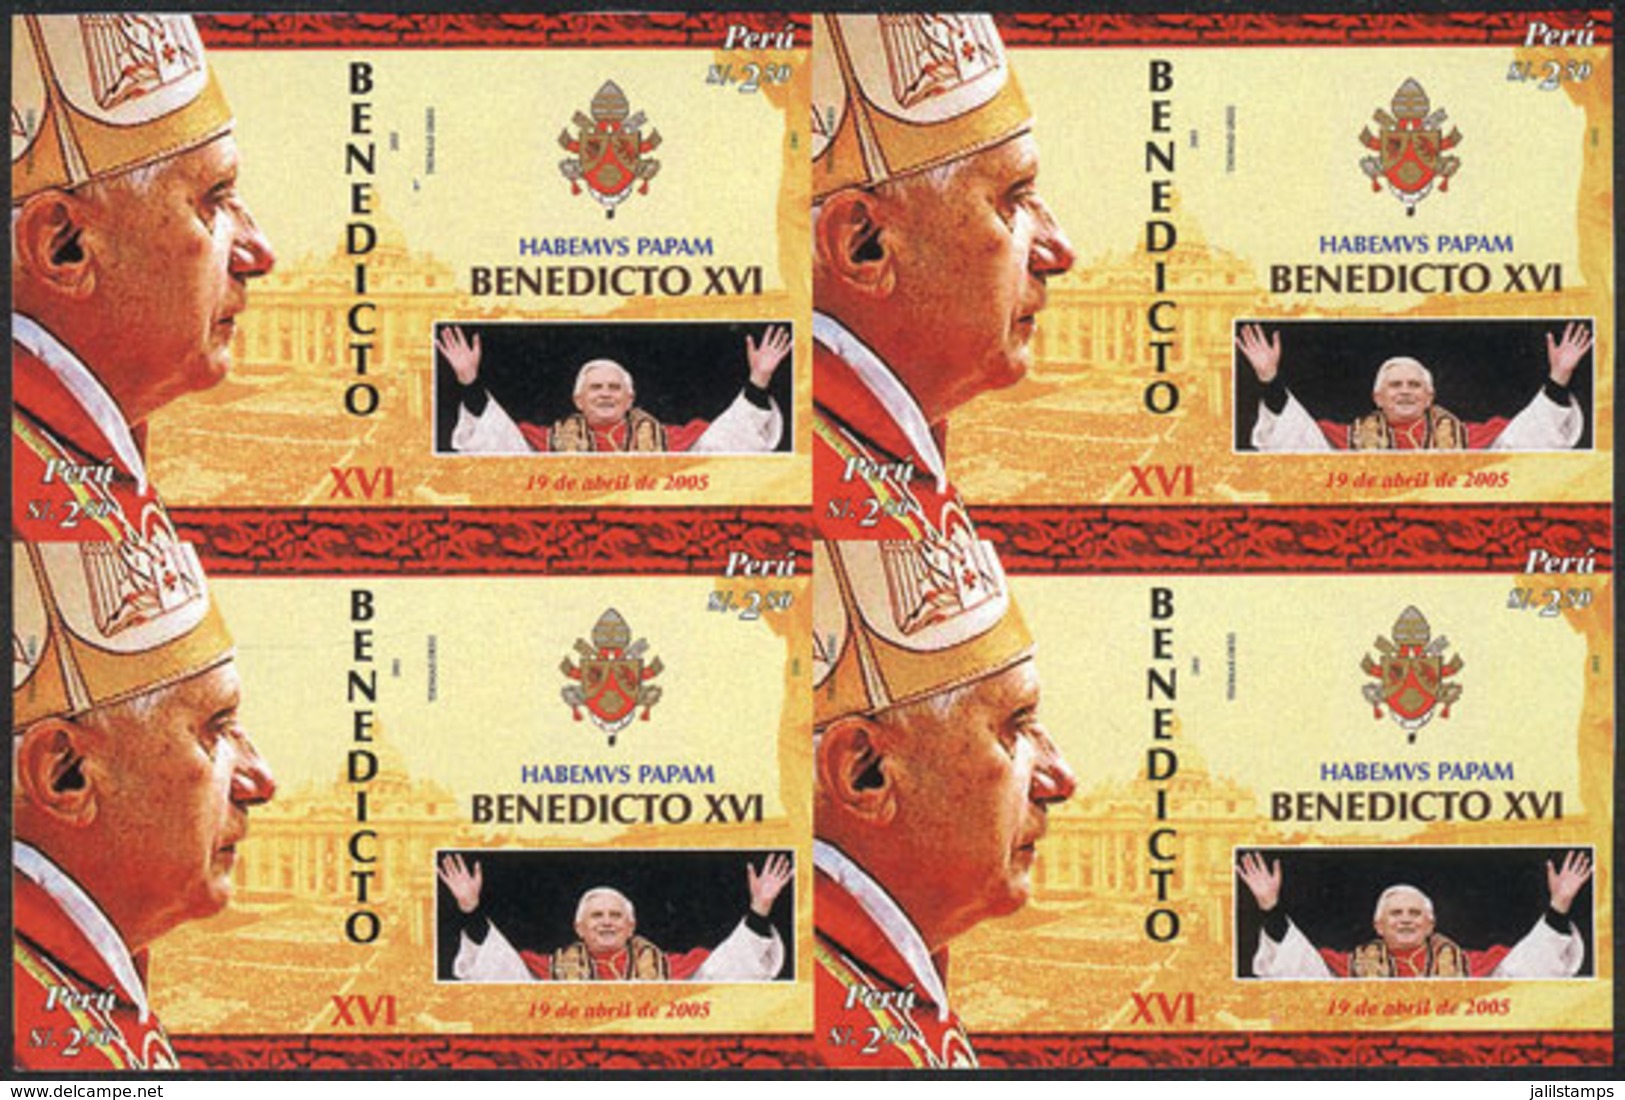 1660 PERU: Sc.1489, 2006 Pope Benedict XVI, IMPERFORATE BLOCK OF 4 Consisting Of 4 Sets, Excellent Quality, Rare! - Peru